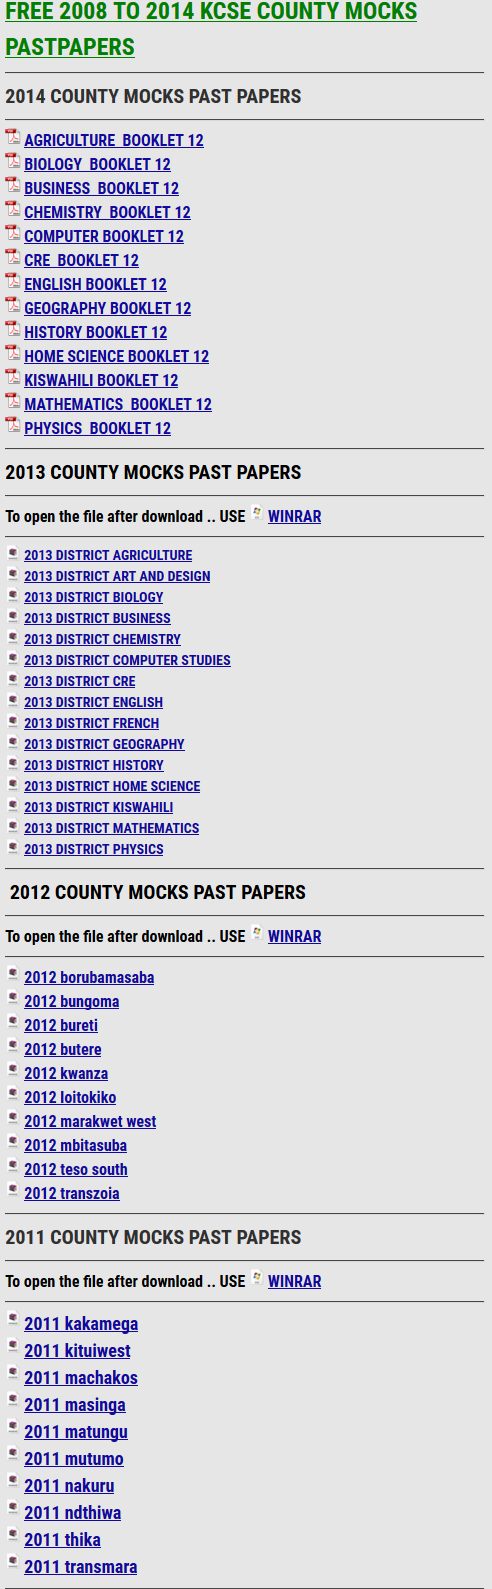 FREE 2008 TO 2014 KCSE COUNTY MOCKS PASTPAPERS - KCSE ONLINE